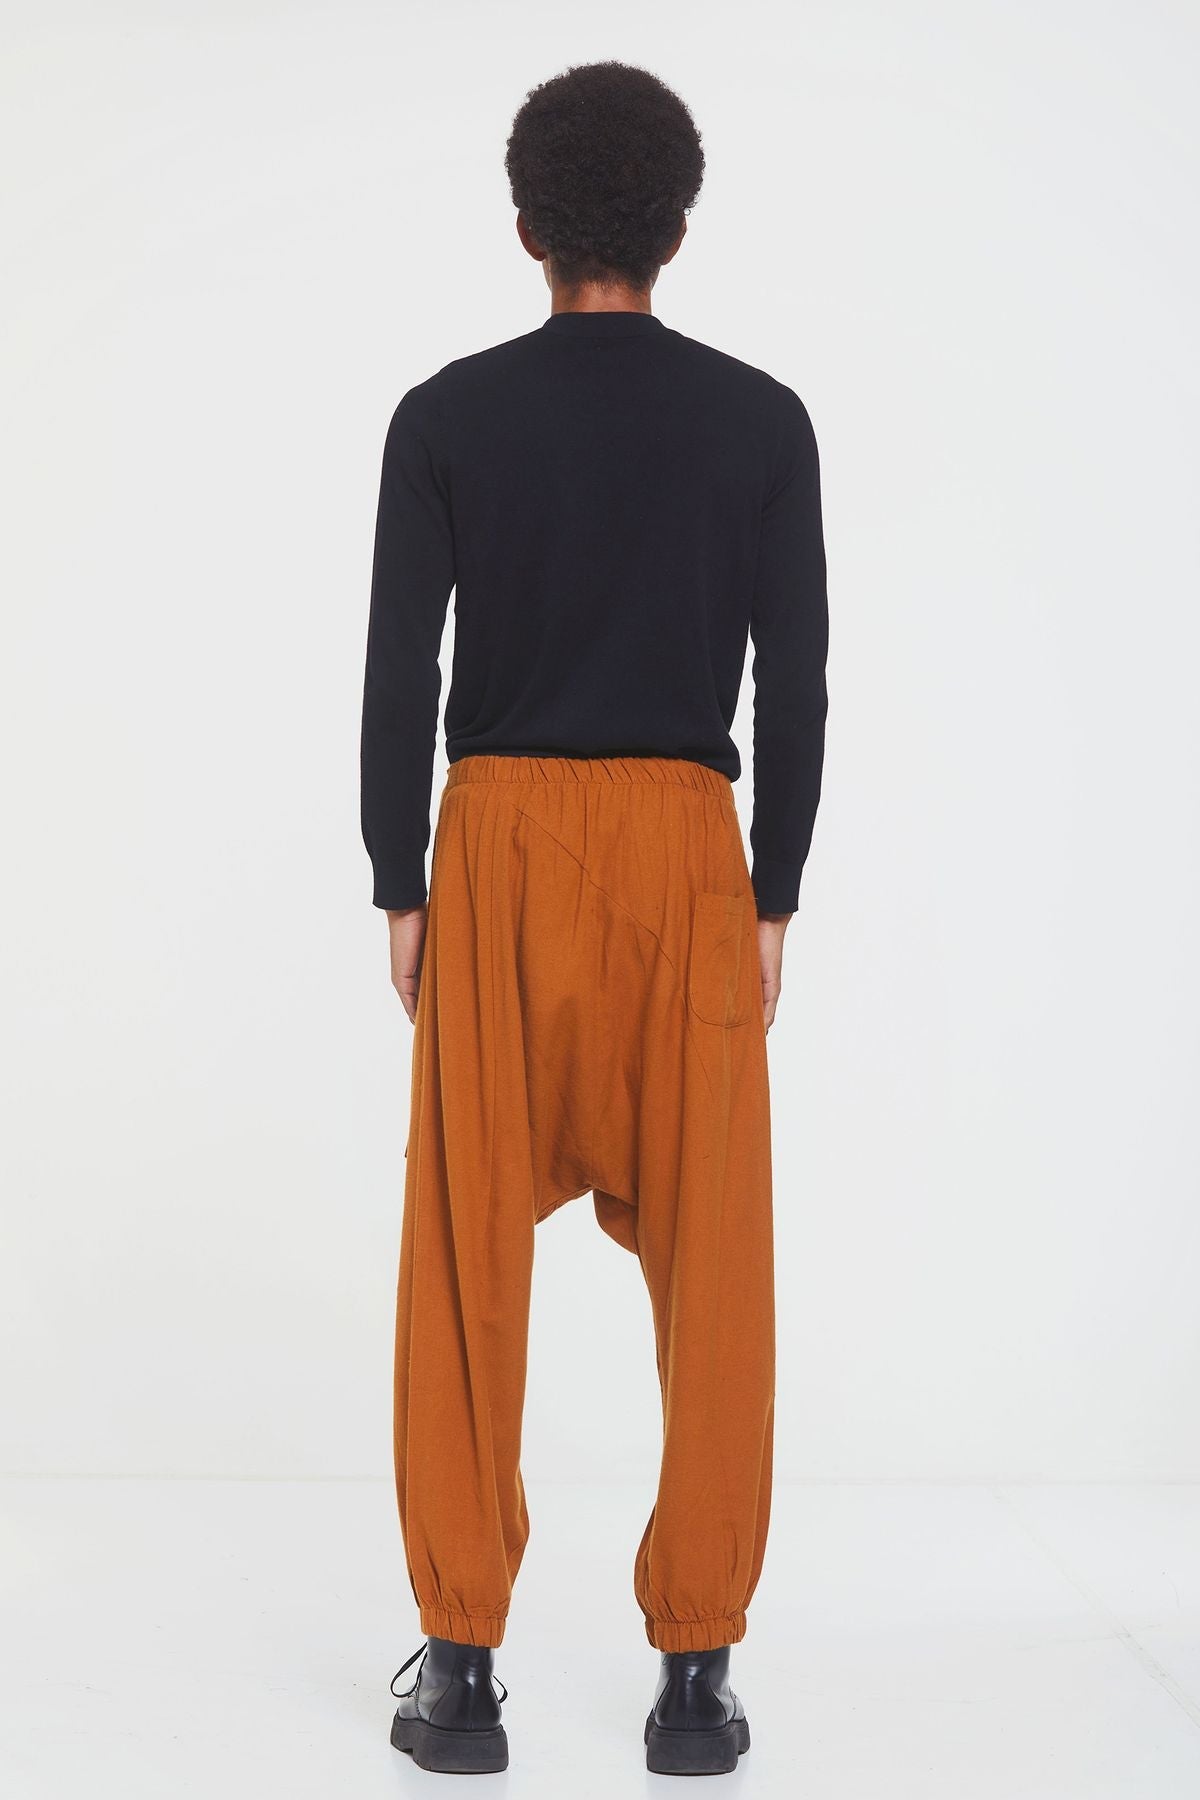 Elastic Cuff Men's Winter Harem Pants with Pocket Orange